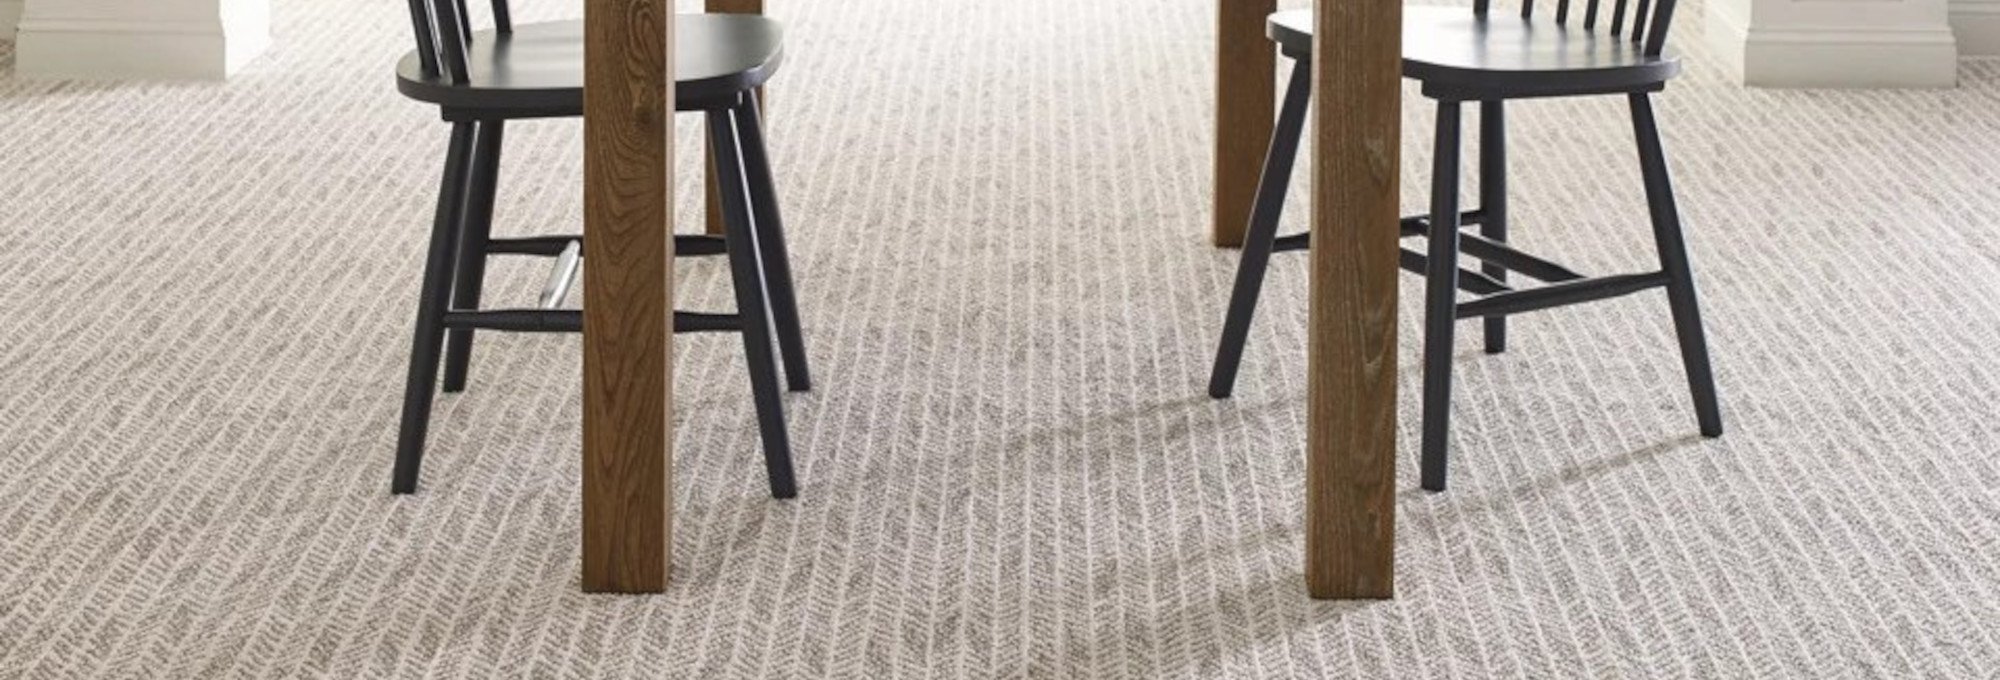 Chairs and table on carpet floor - Uptight Flooring, AZ | 1551 N Dysart Rd, Avondale, AZ 85392